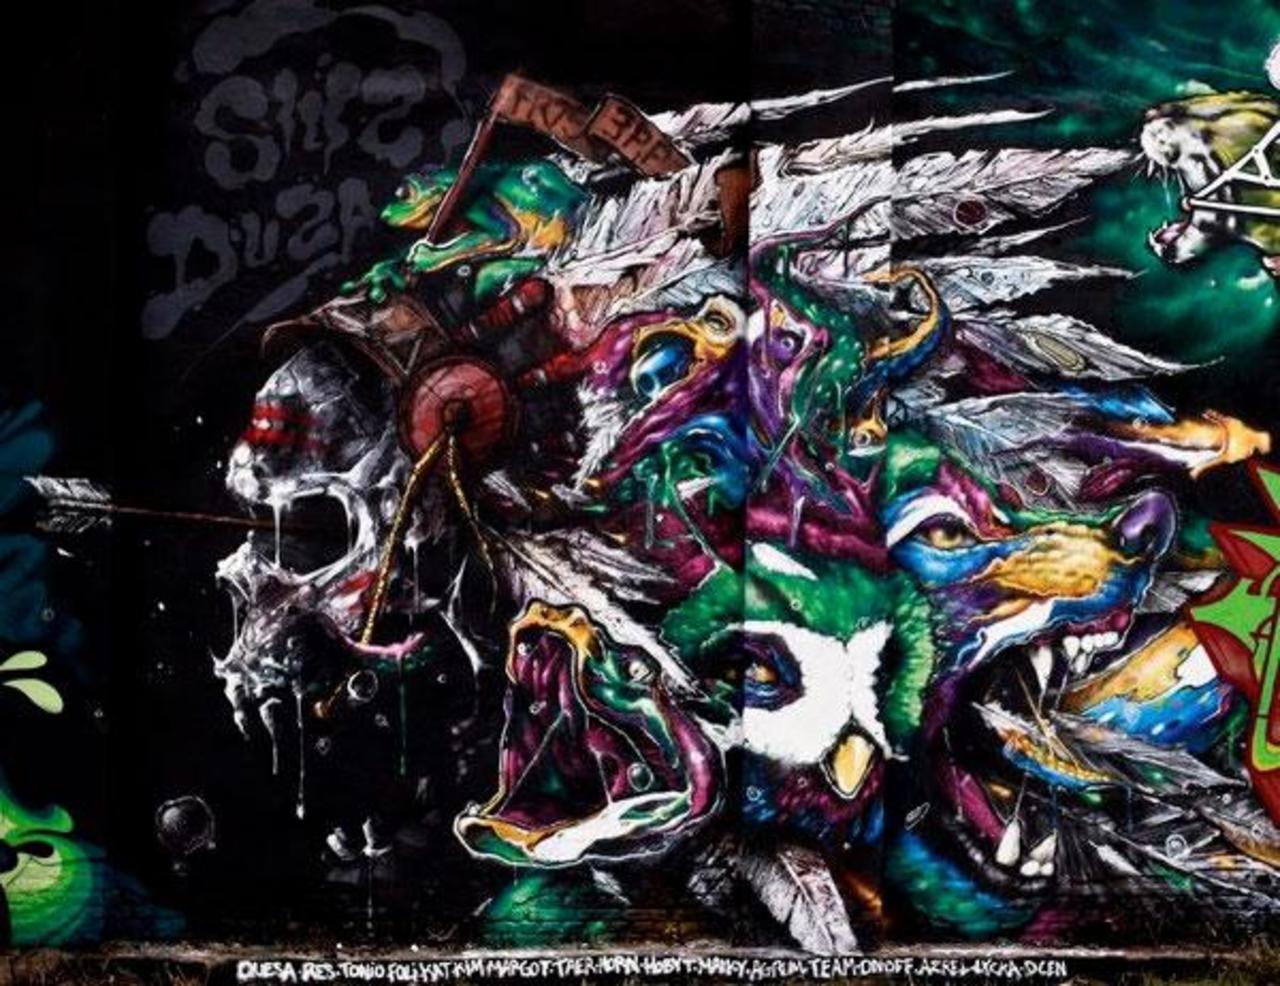 #Streetart #urbanart #graffiti #painting #mural des artistes Sly2 et Duza #Paris France http://t.co/zN16TdvJkQ